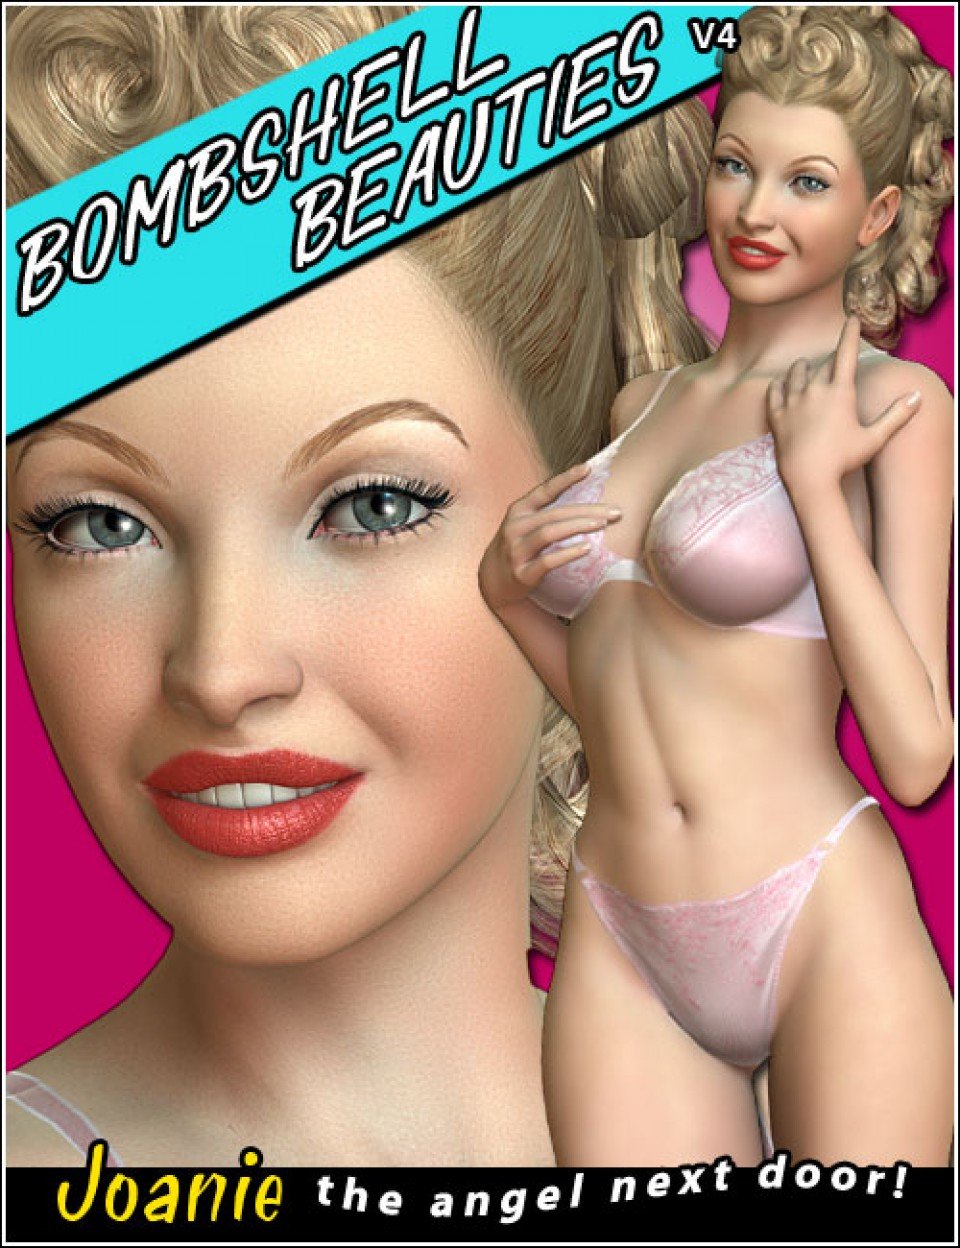 Bombshell Beauties V4 Joanie_DAZ3DDL